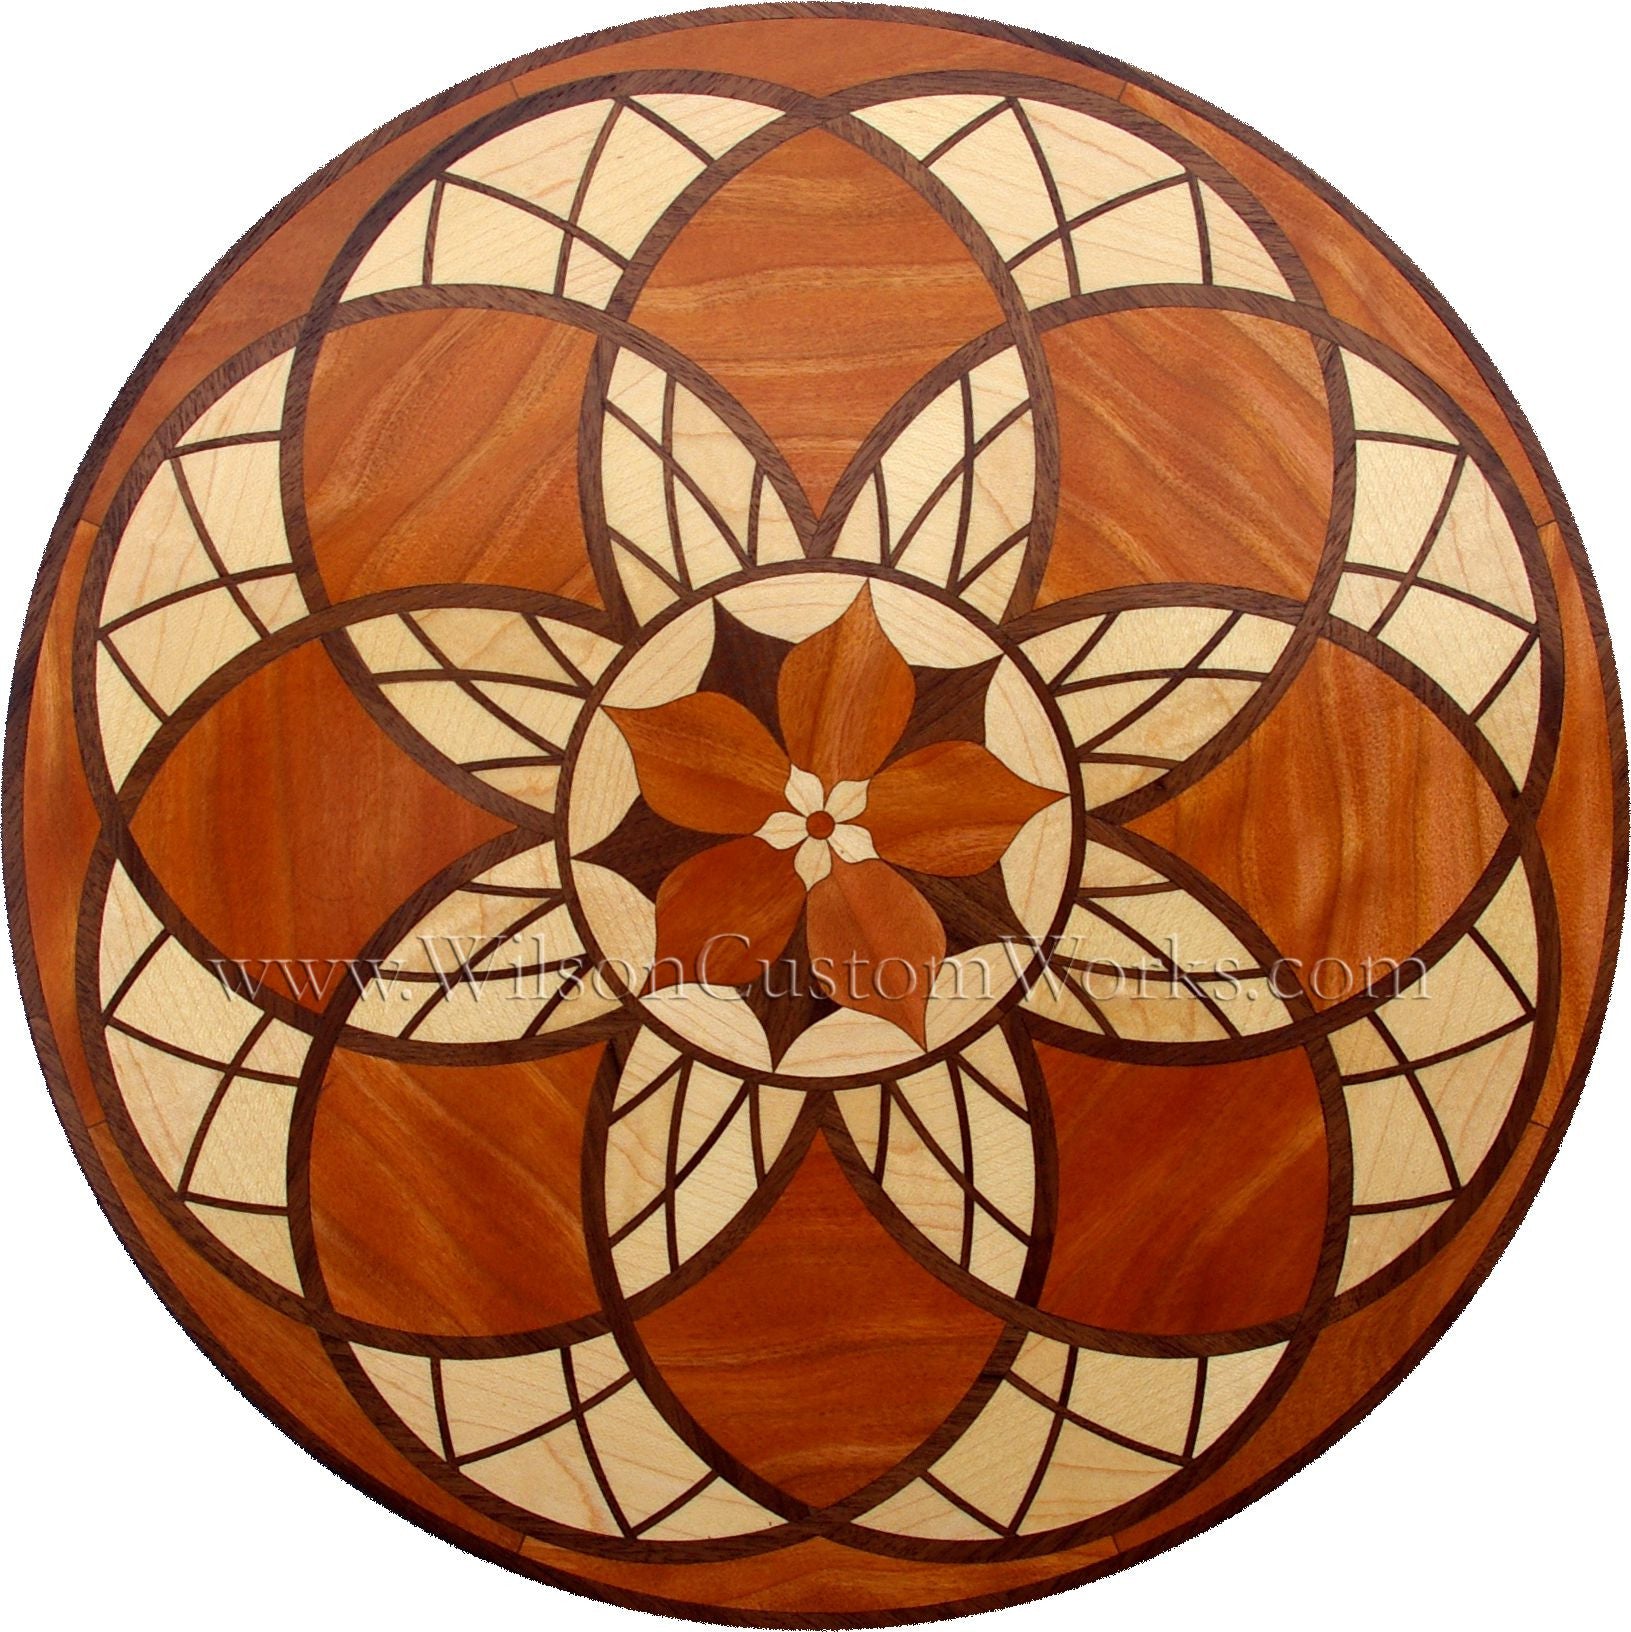 Wilson Custom Works hardwood wood floor inlay medallion stained glass design